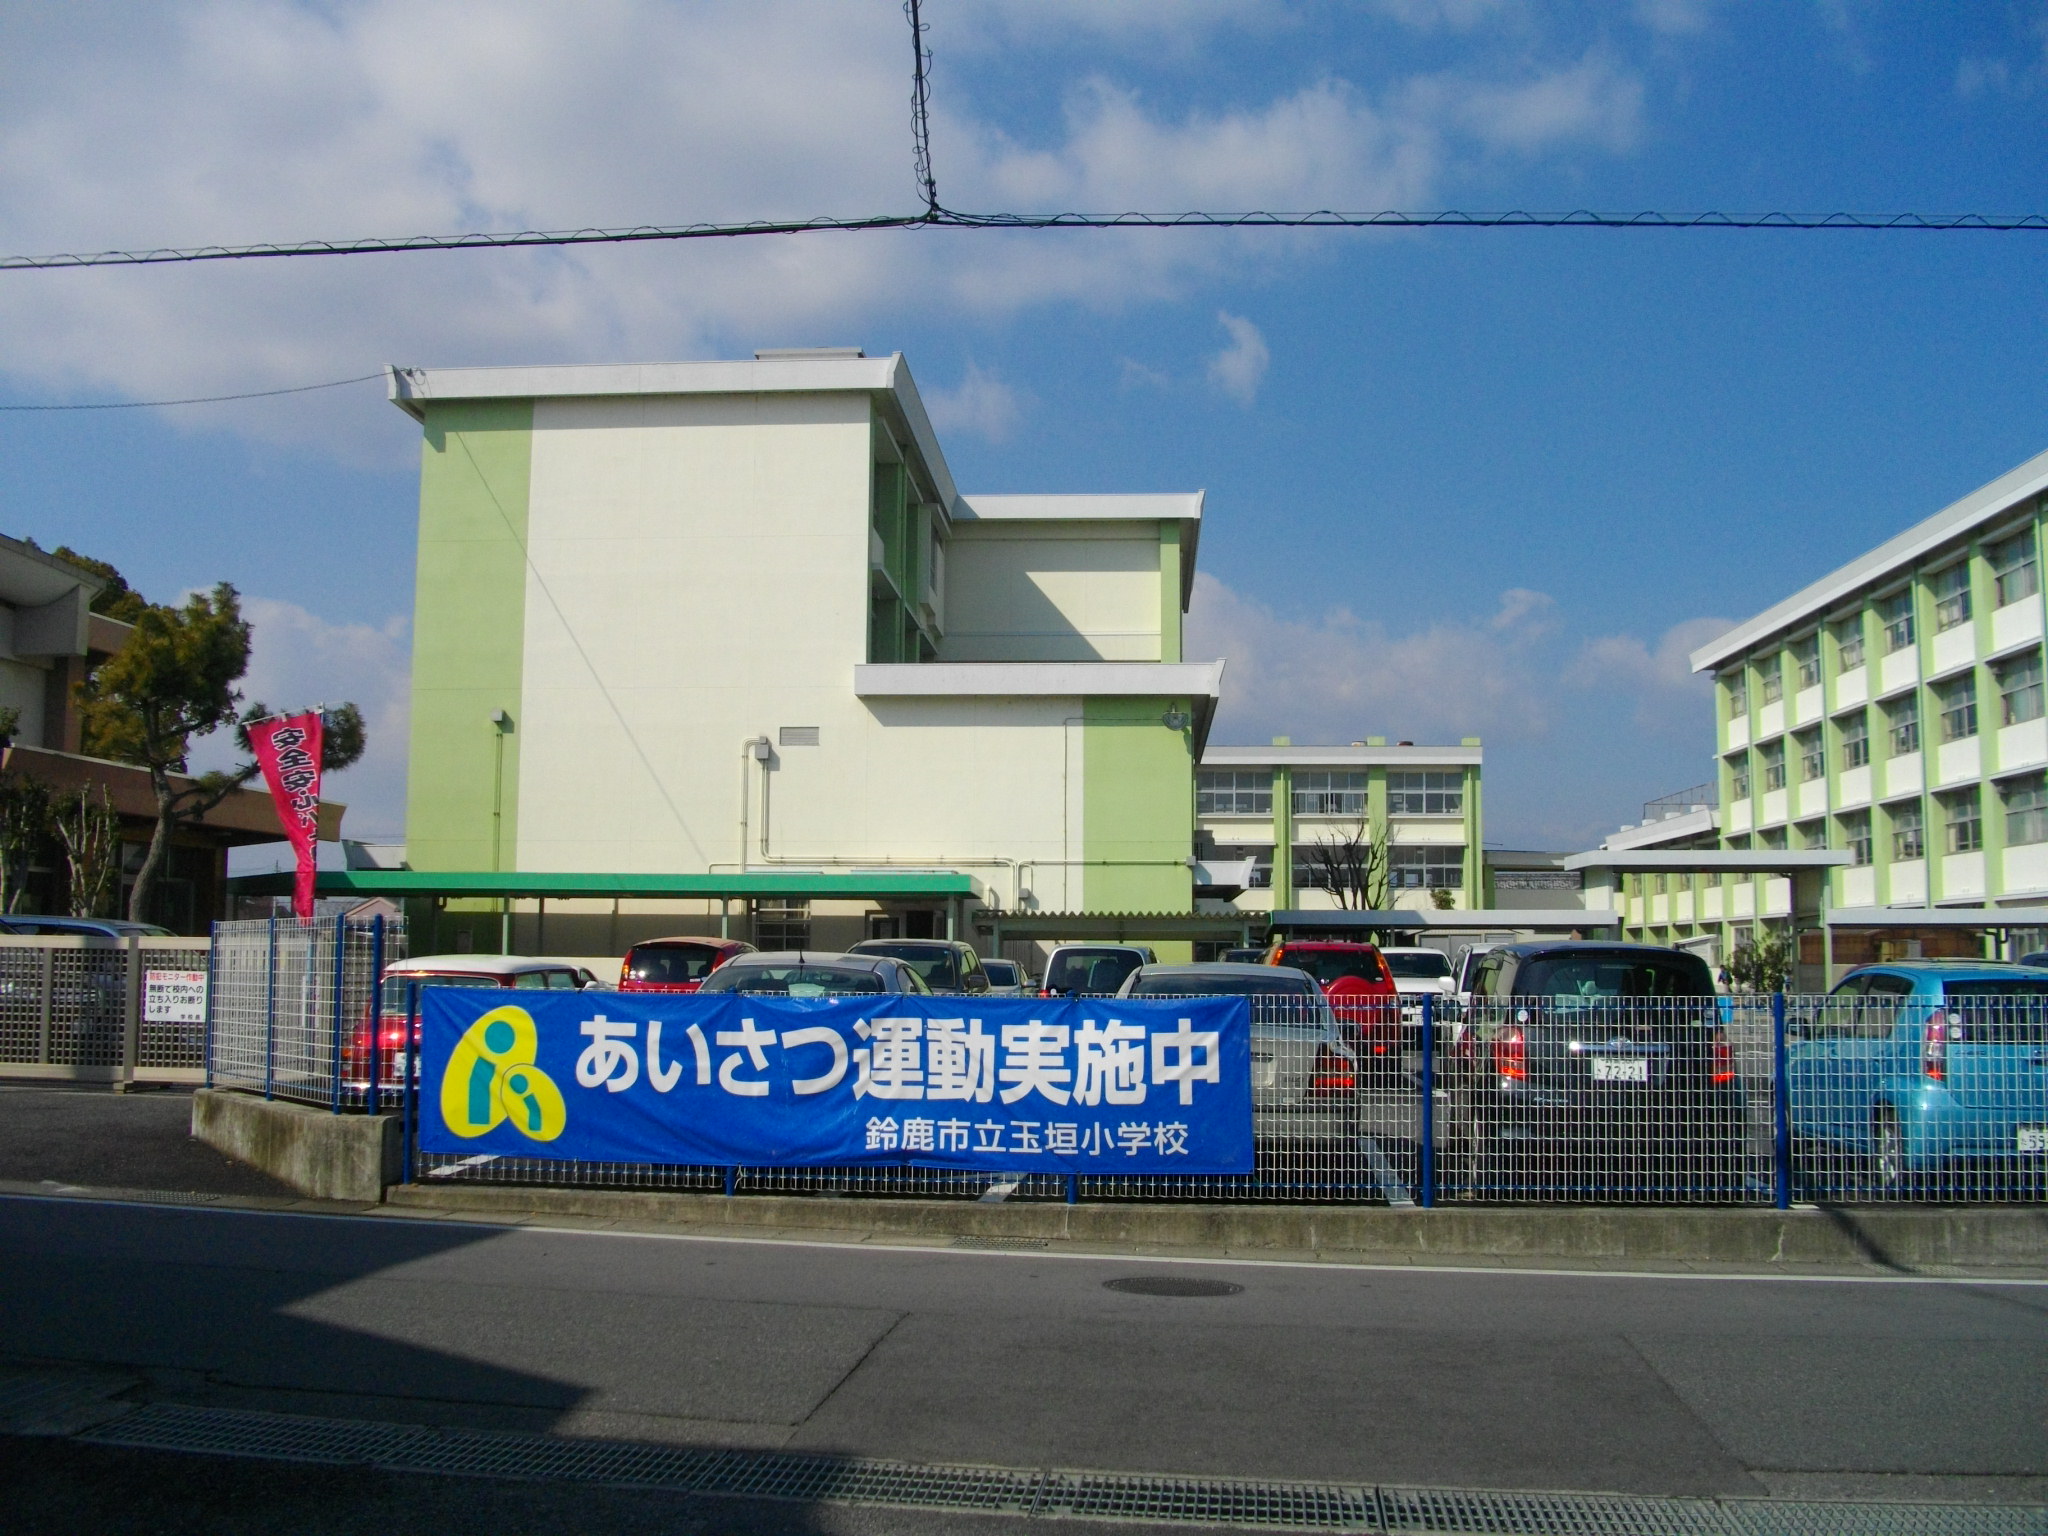 Primary school. 2327m to Suzuka Municipal Tamagaki elementary school (elementary school)